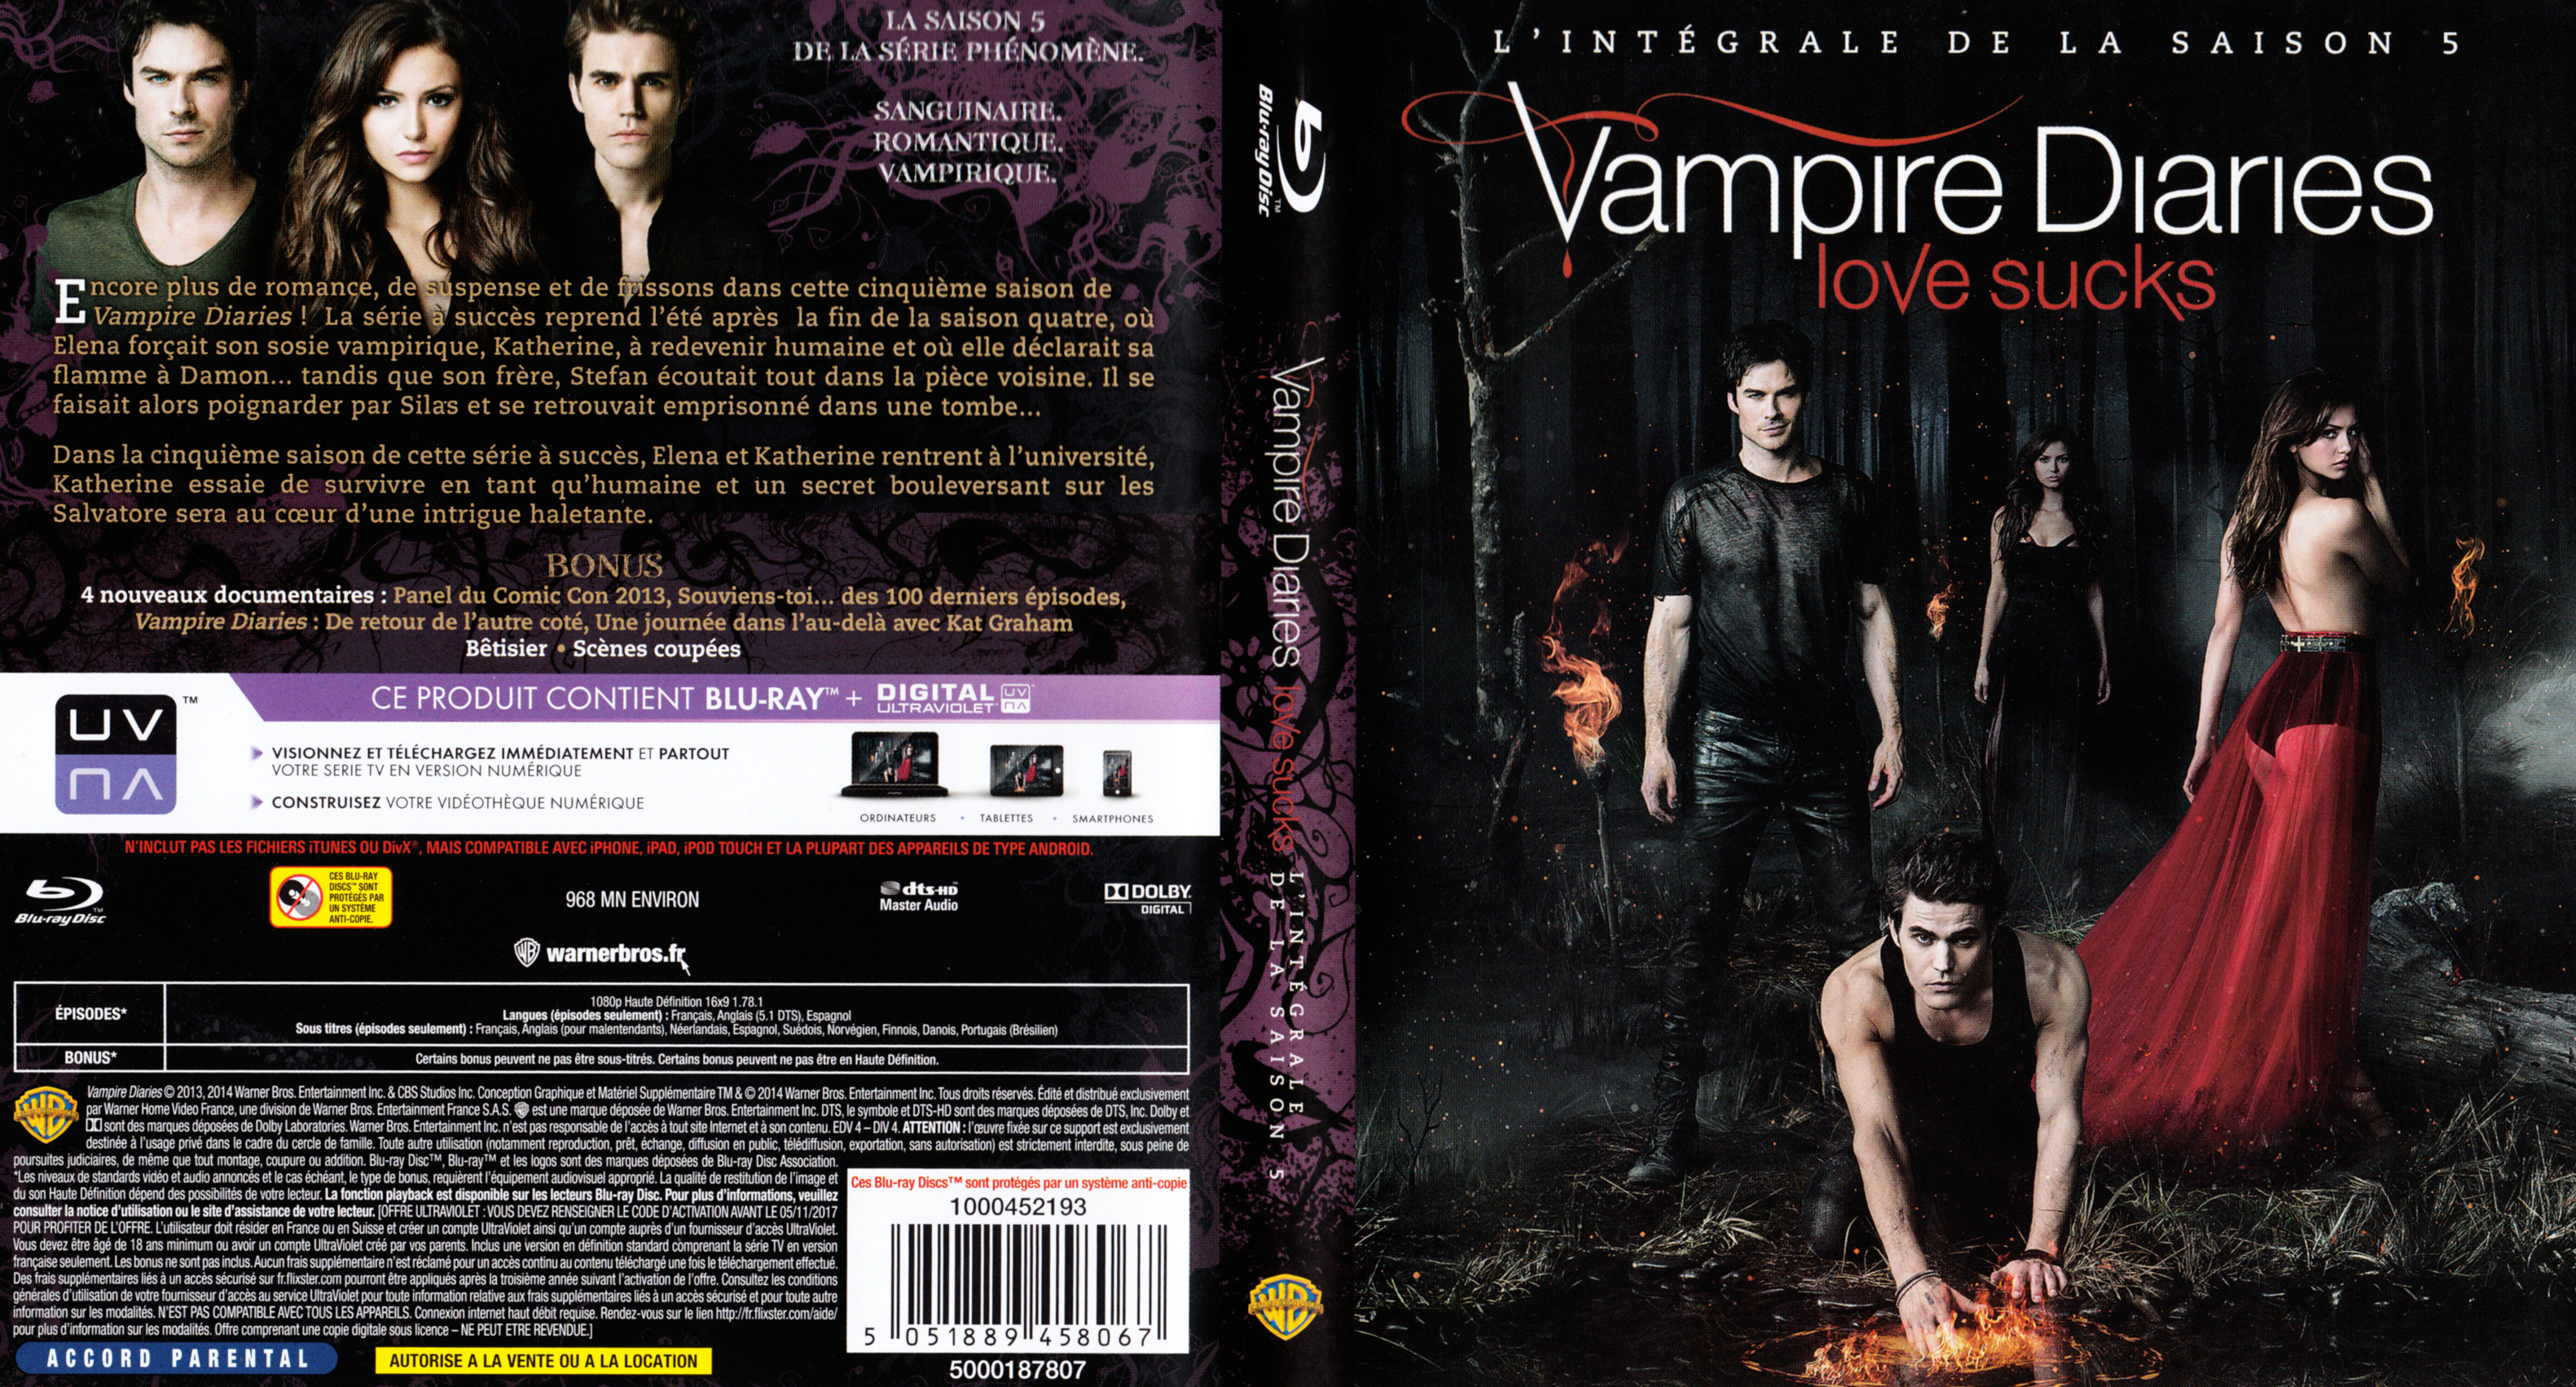 Jaquette DVD Vampire diaries Saison 5 (BLU-RAY)